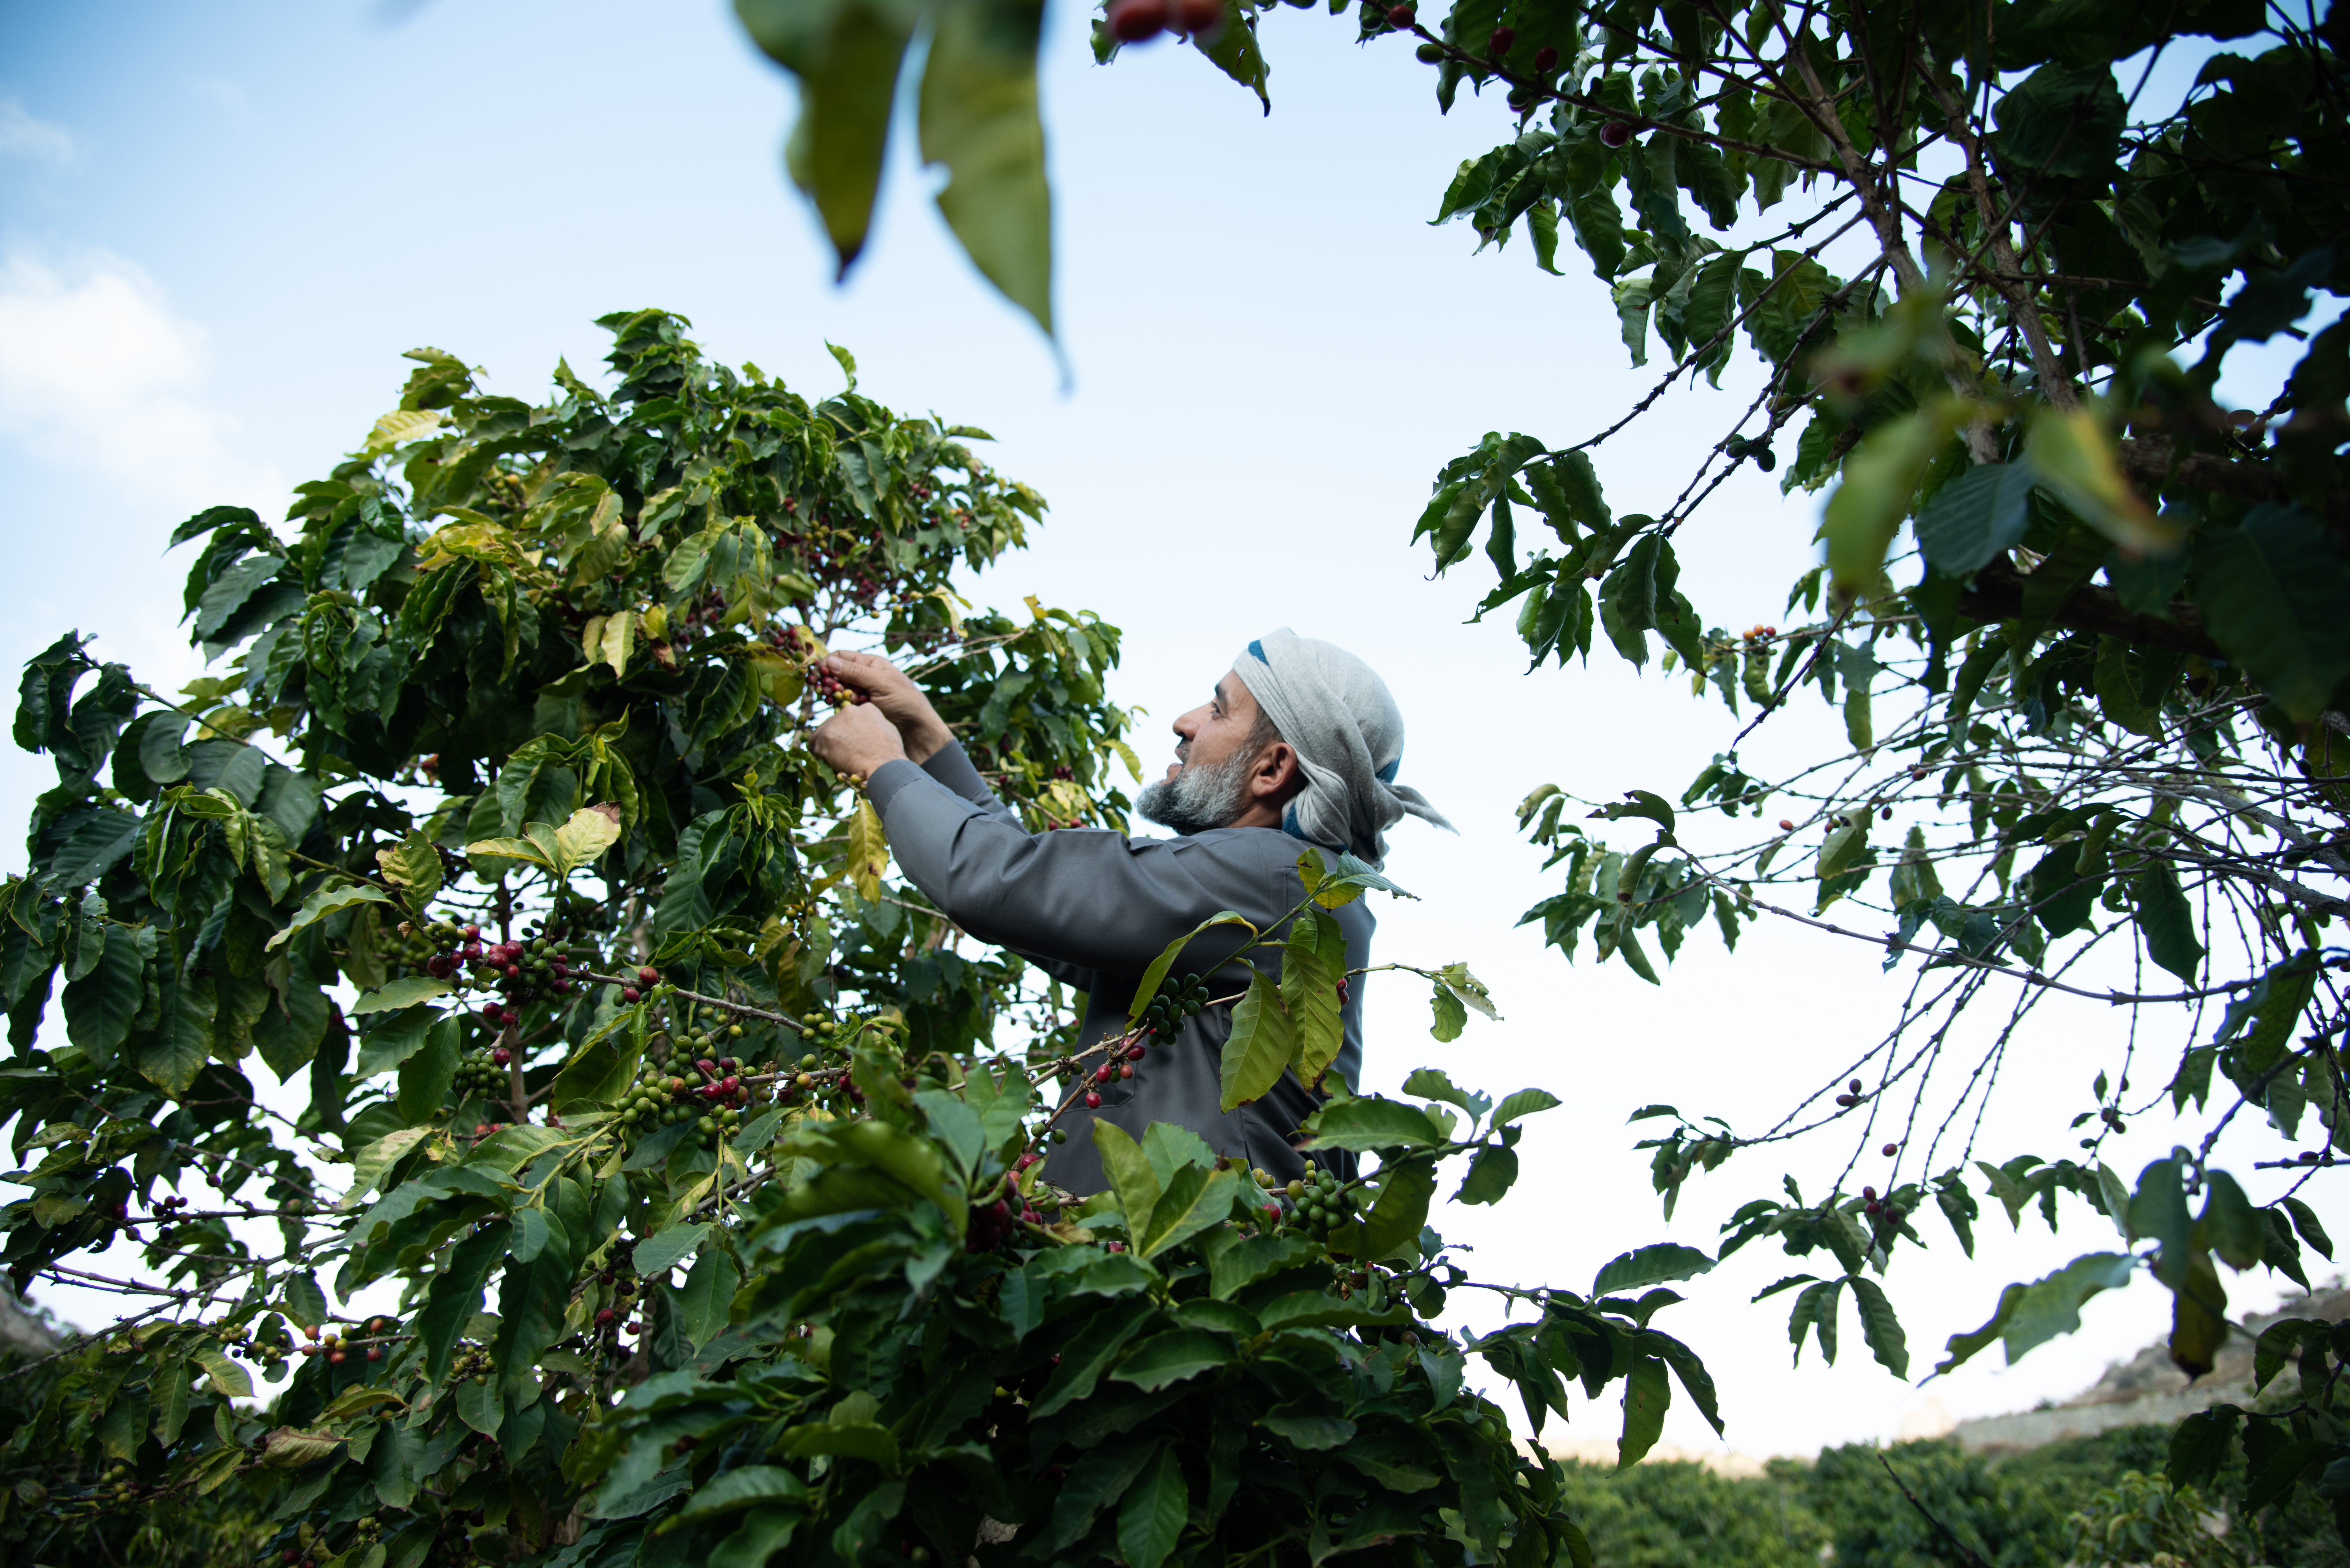 Farmer handpicking the coffee berries